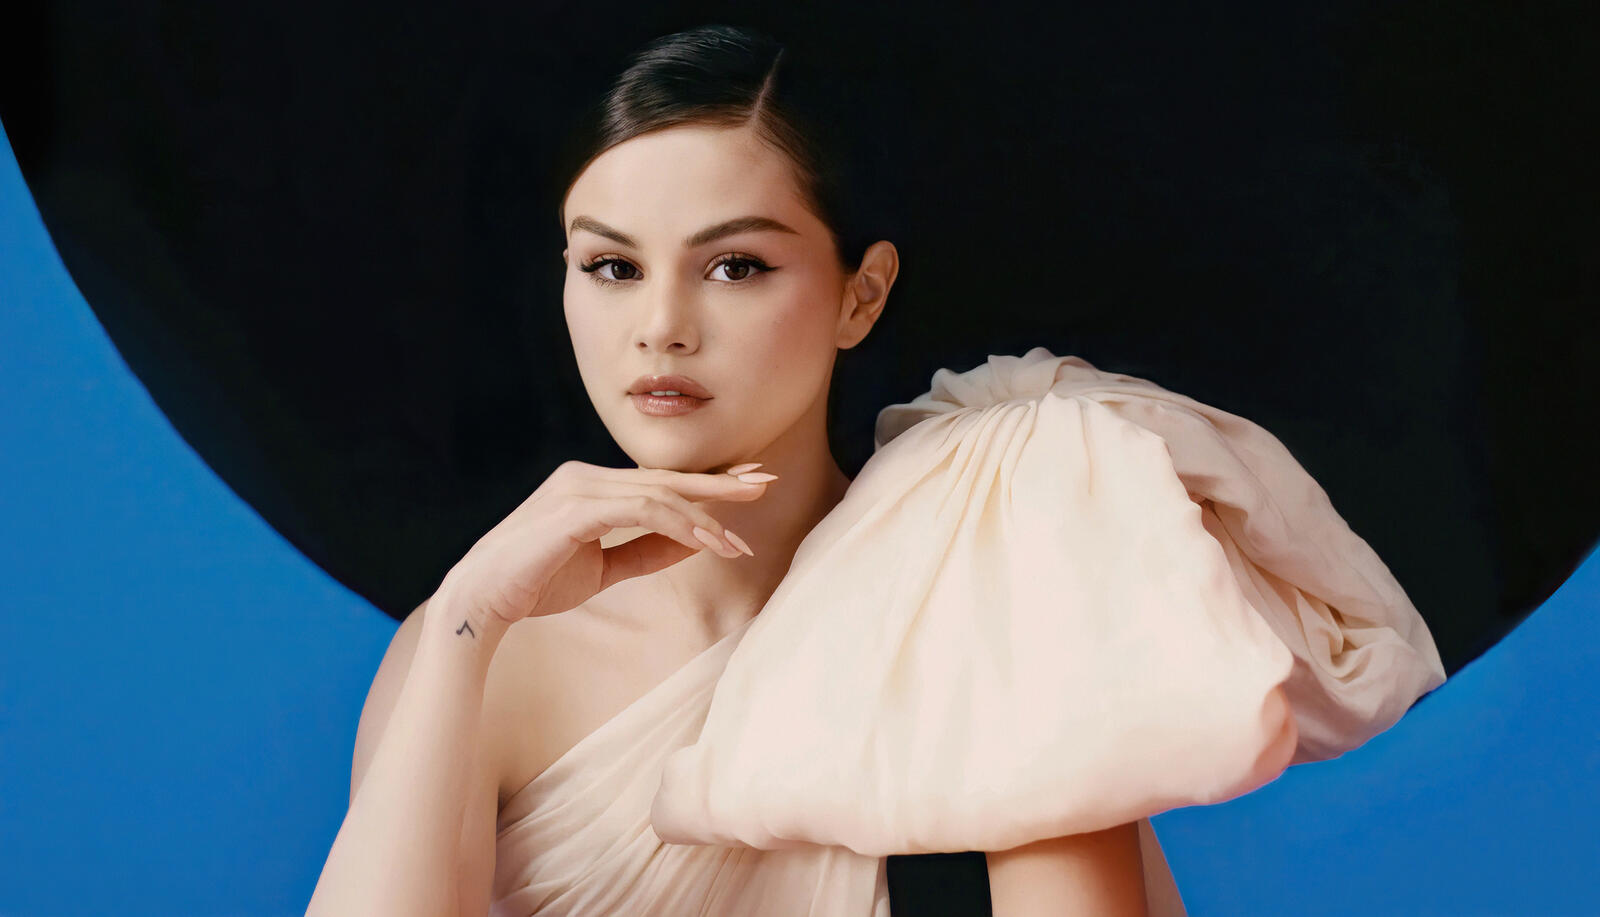 Wallpapers photoshoot Selena Gomez dress on the desktop